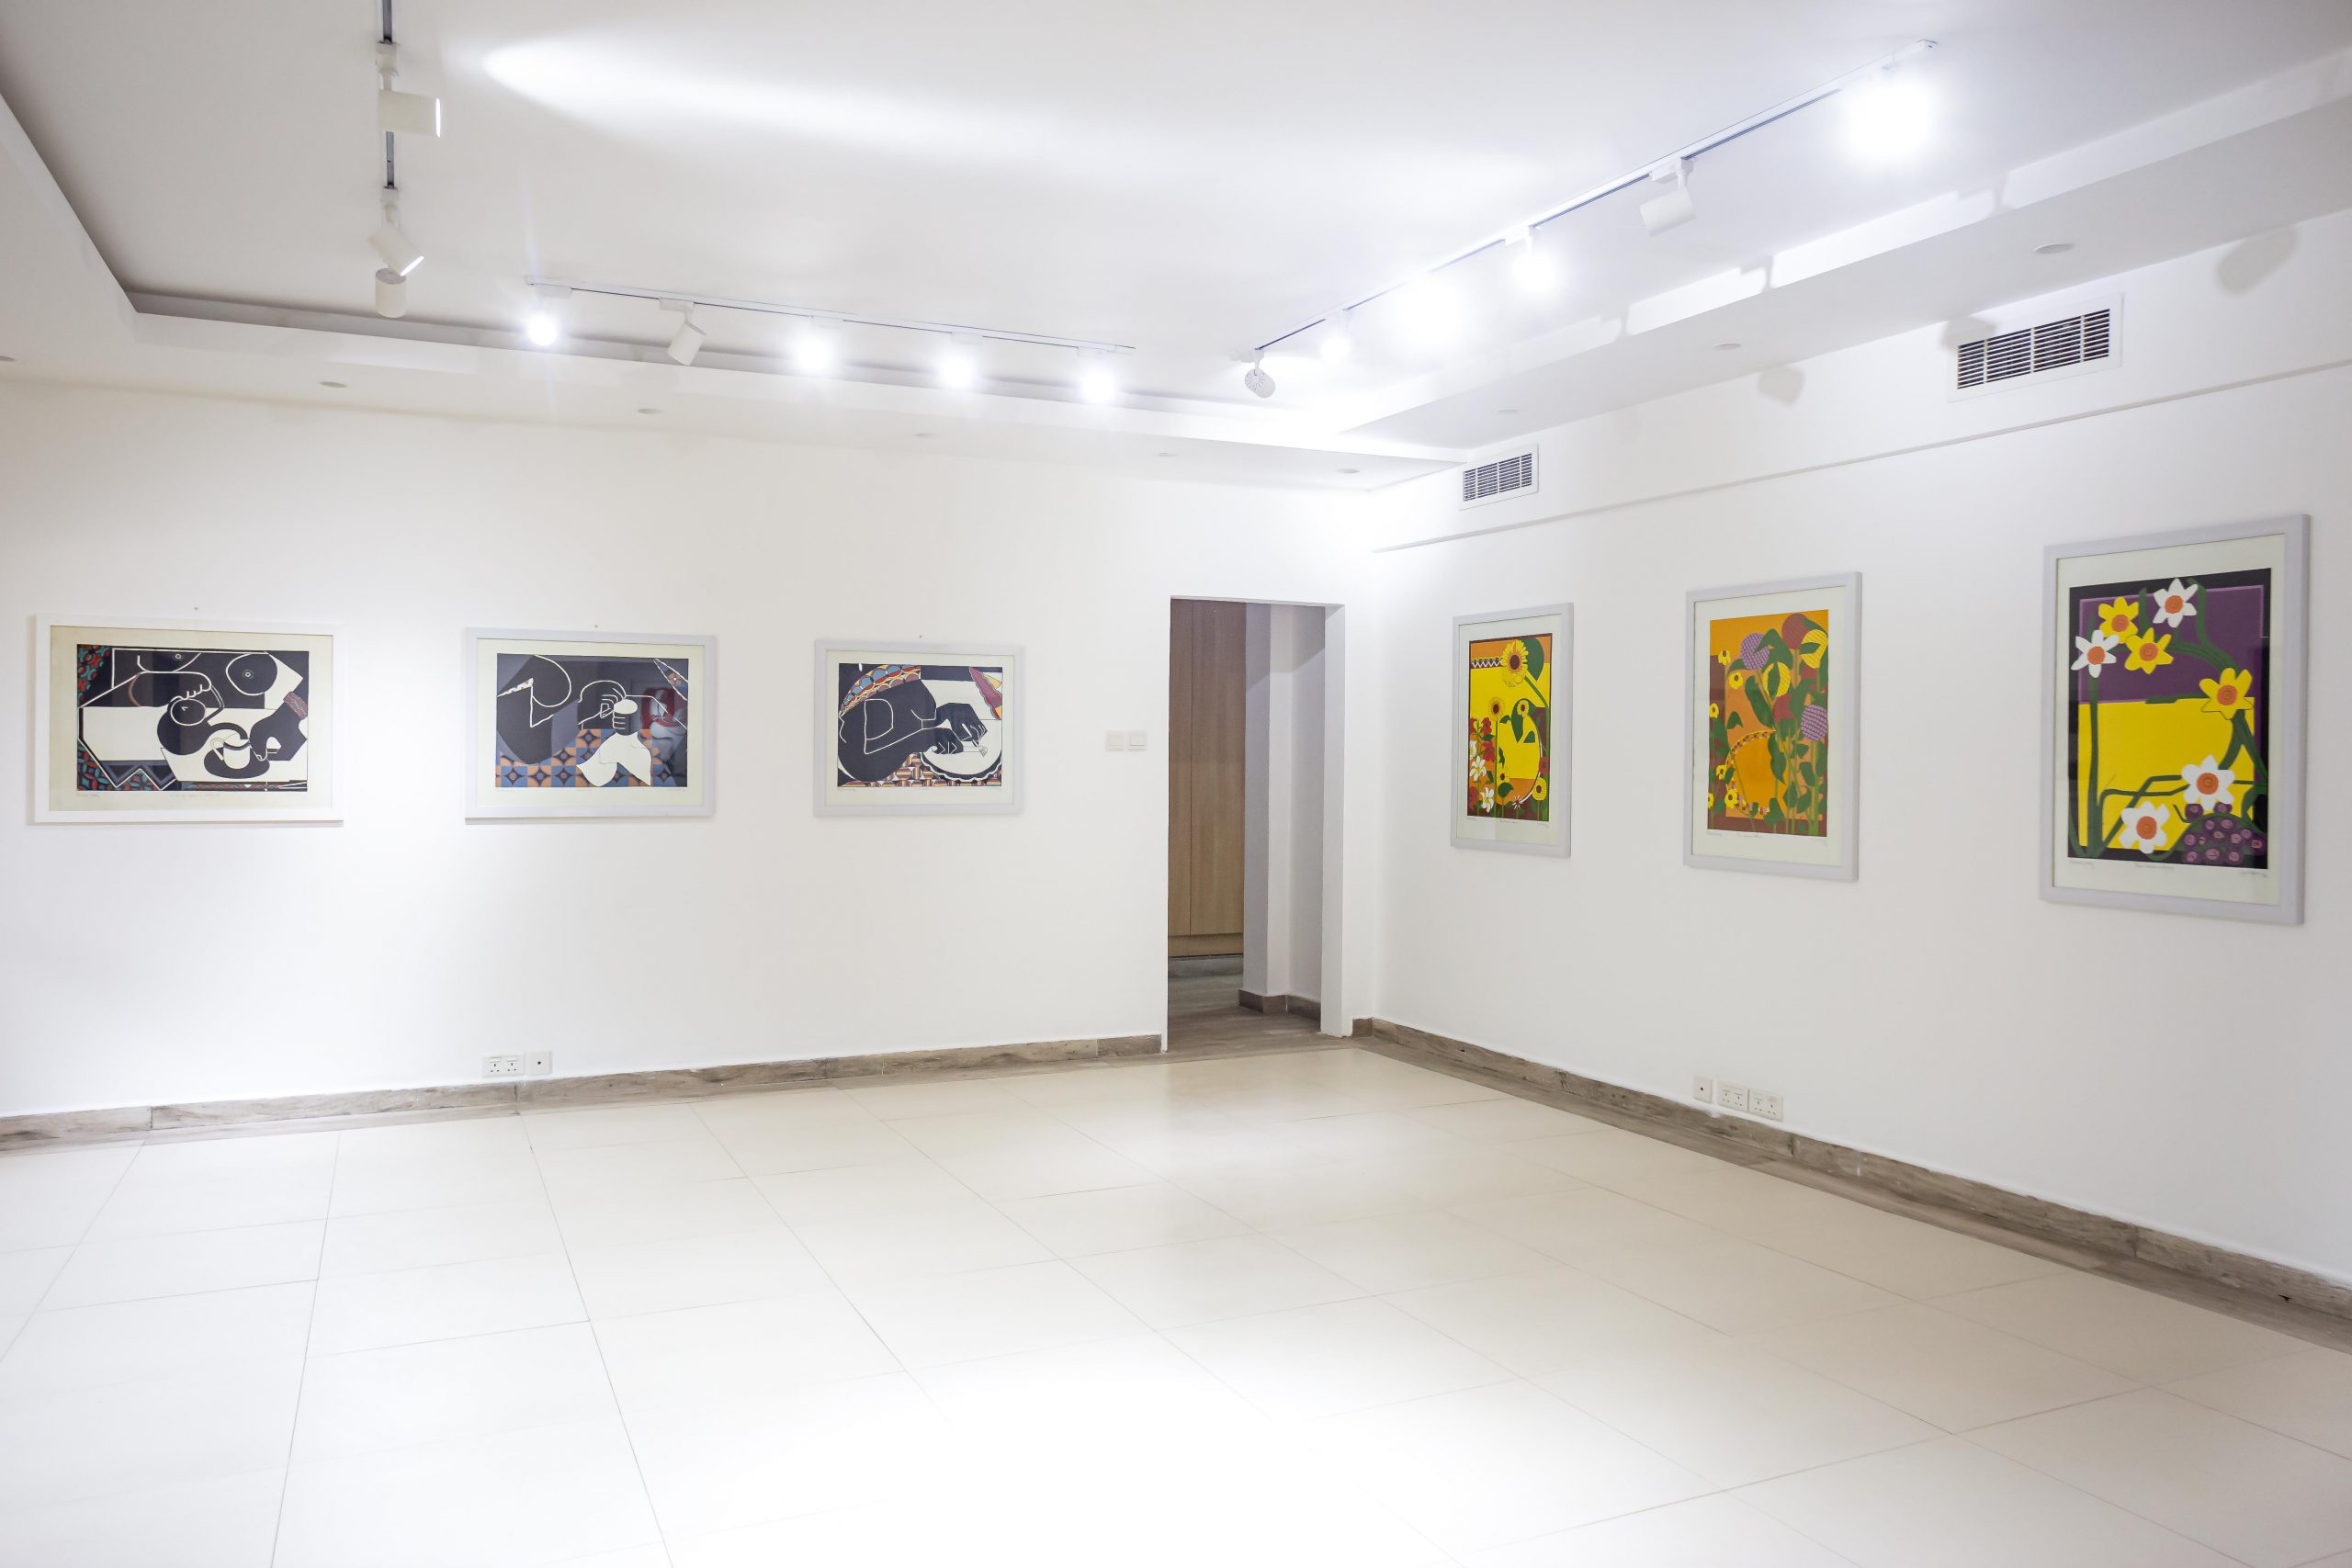 Installation view: Uzo Egonu's Prints at Kó art space in Lagos. Courtesy of Kó